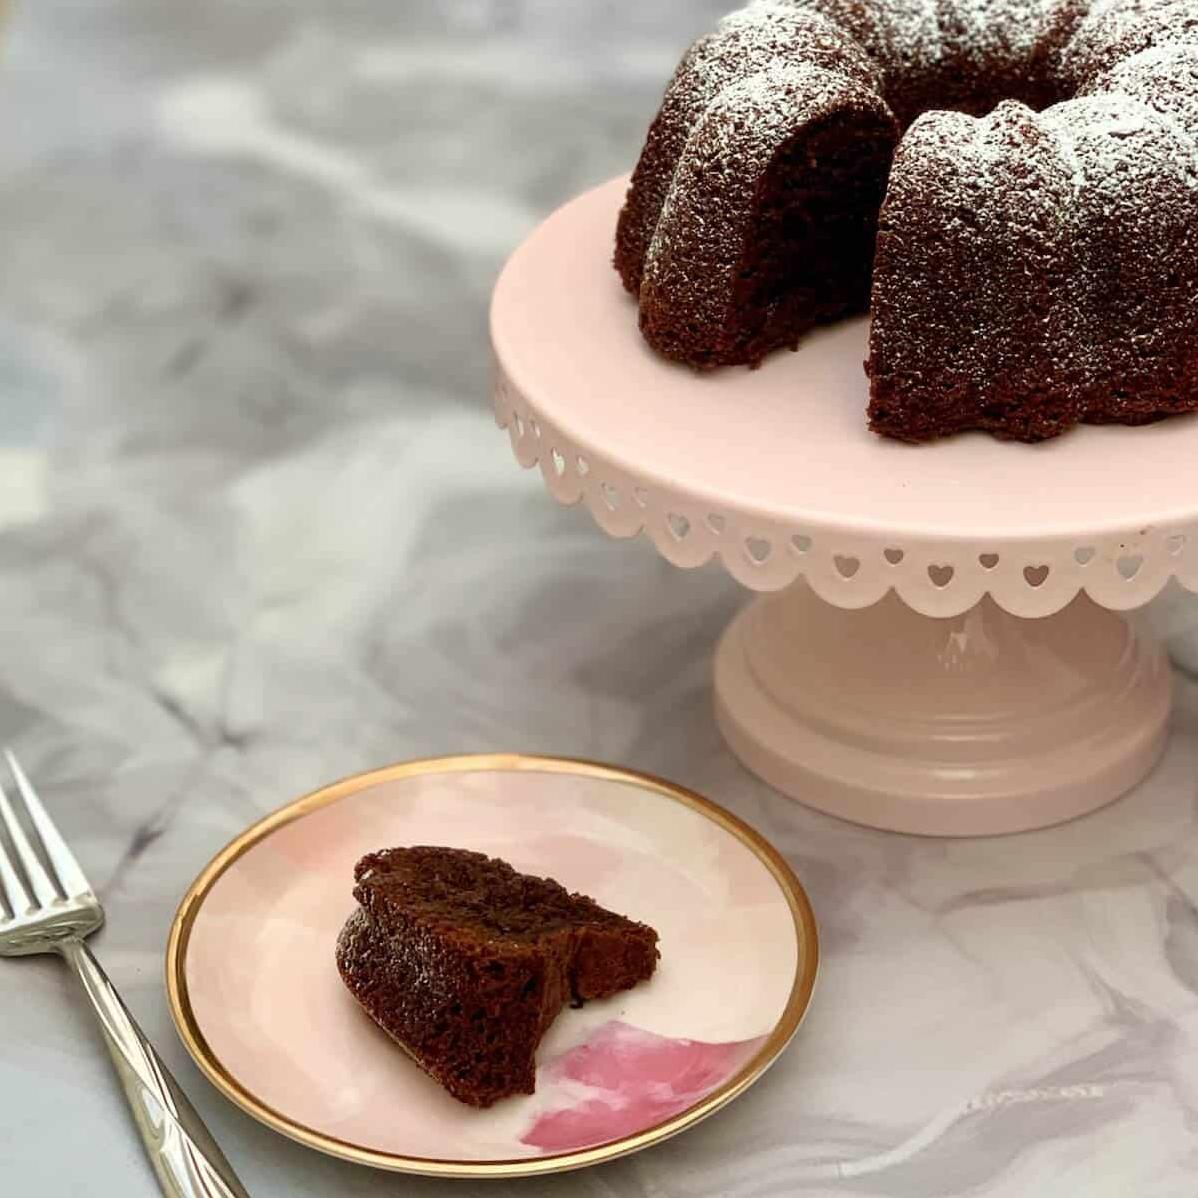  Bite into a slice of decadence with our Chocolate Kahlua Pound Cake.